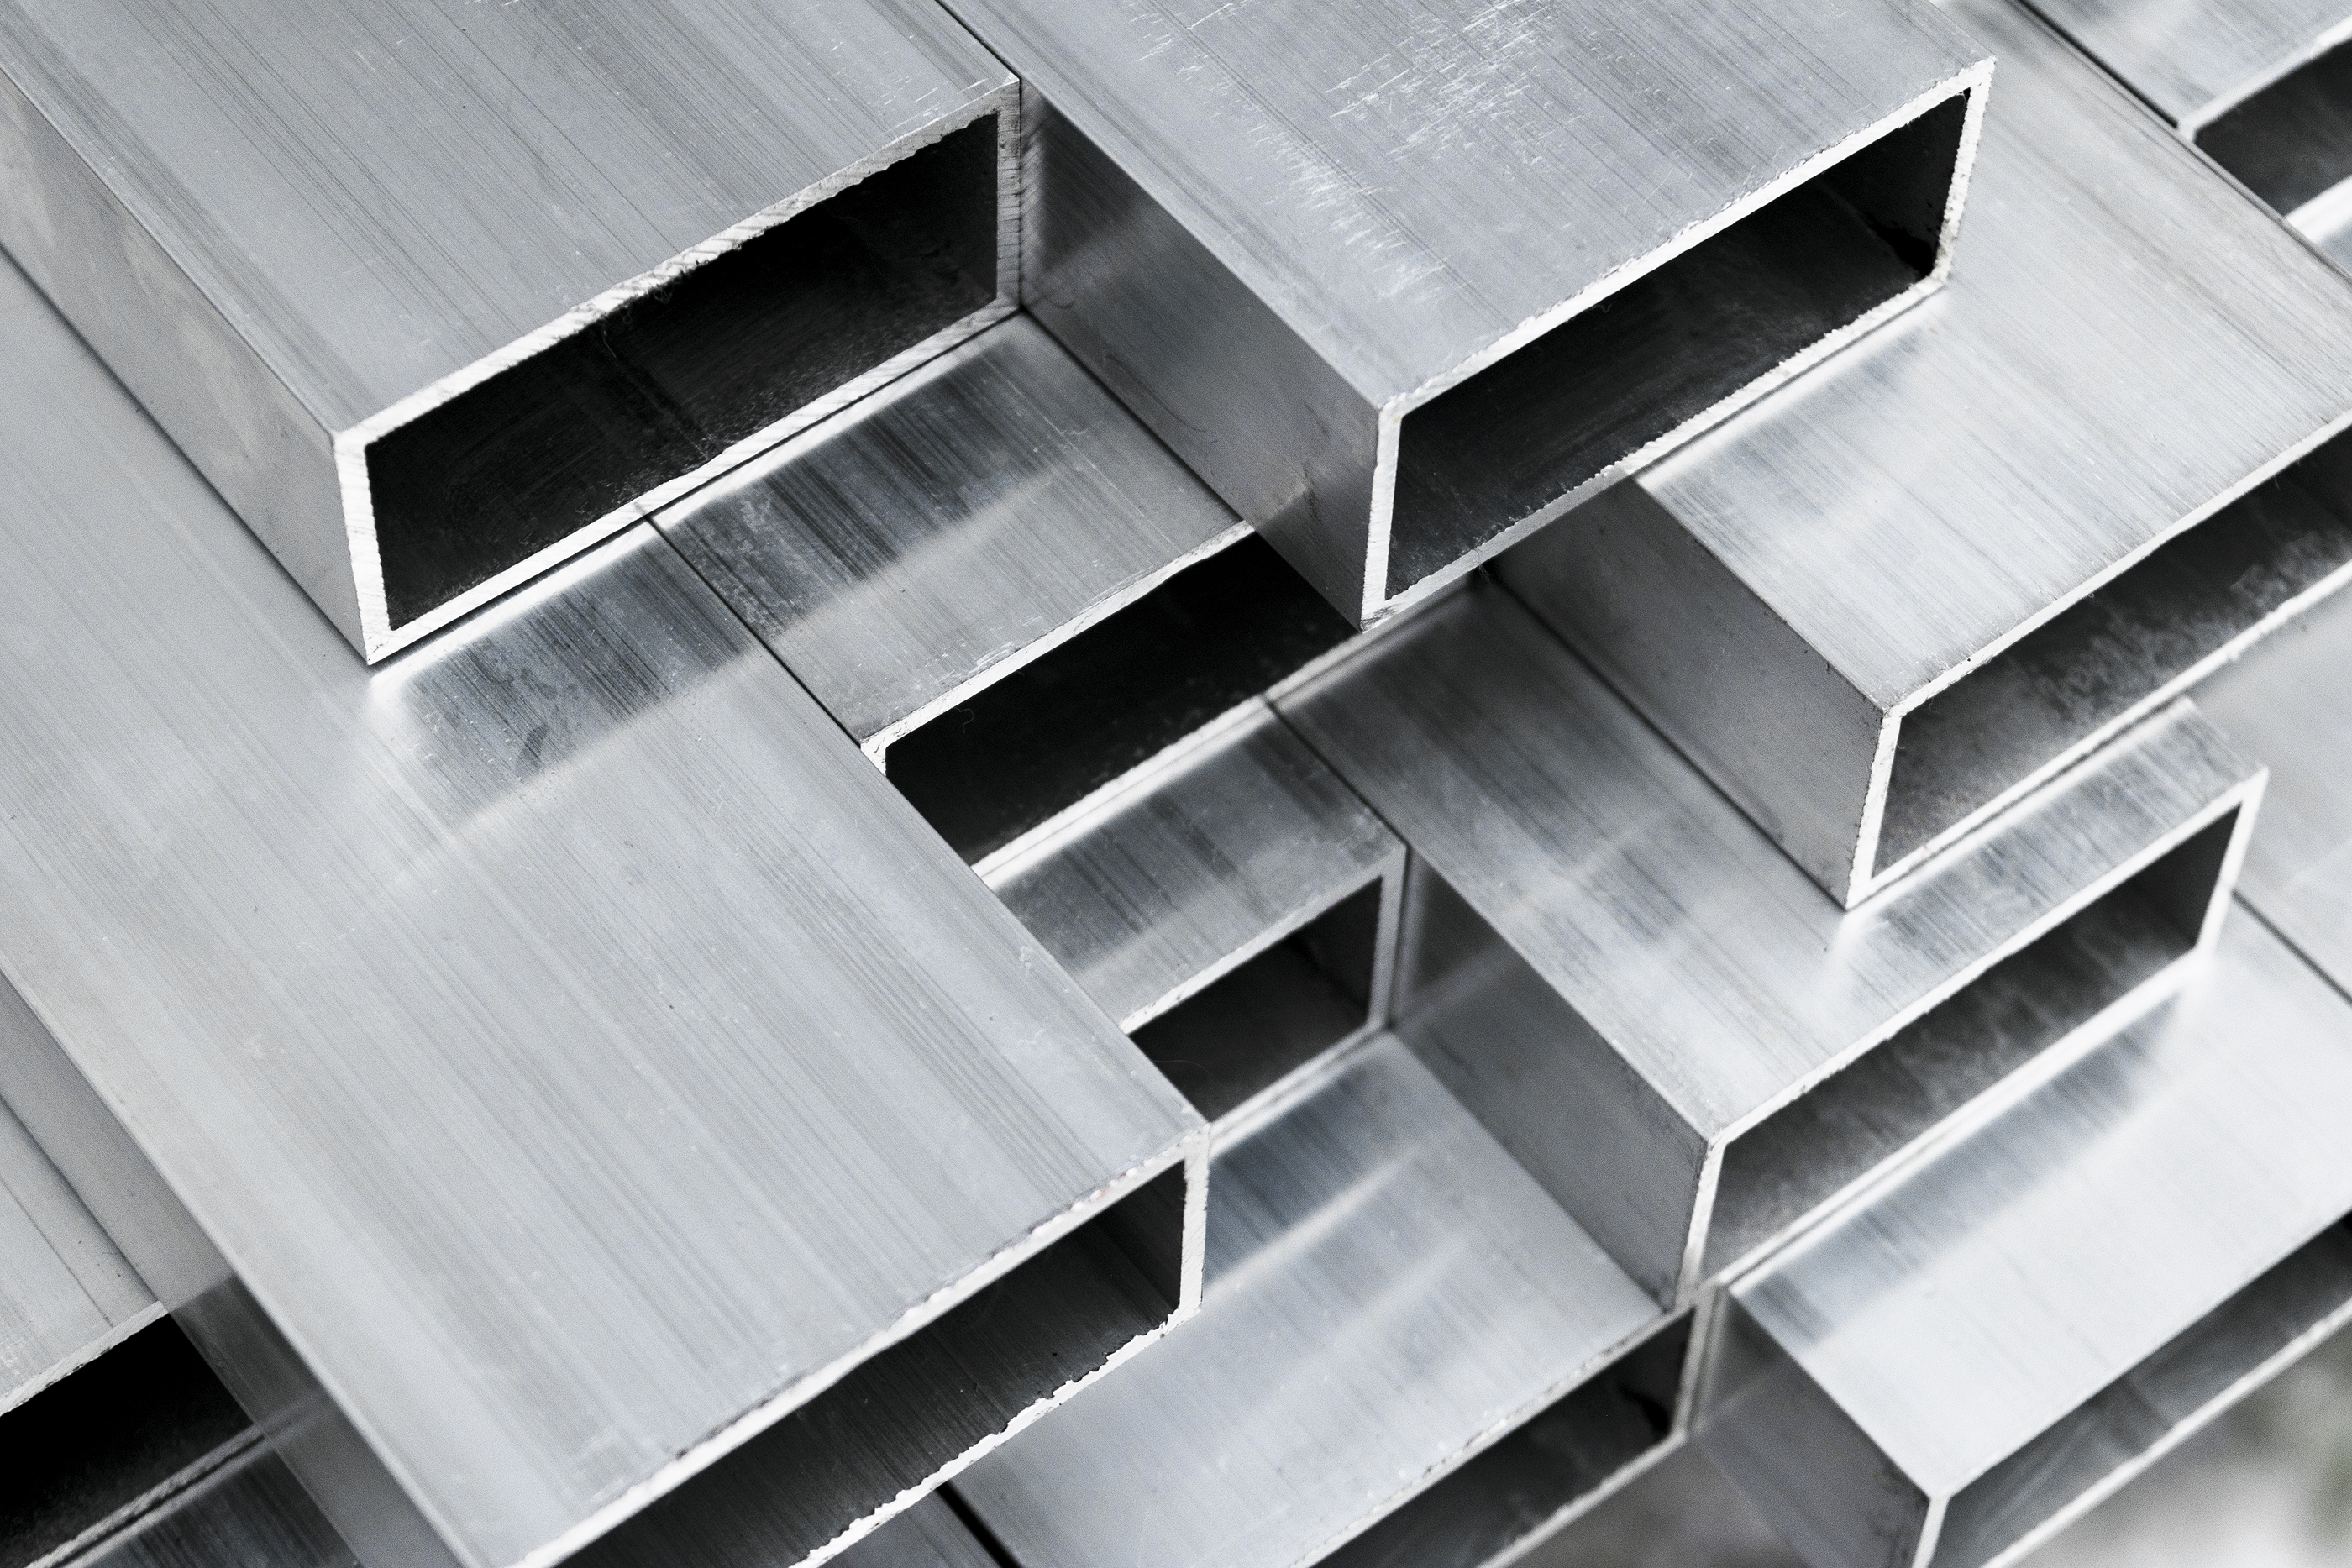 Production employee aluminium